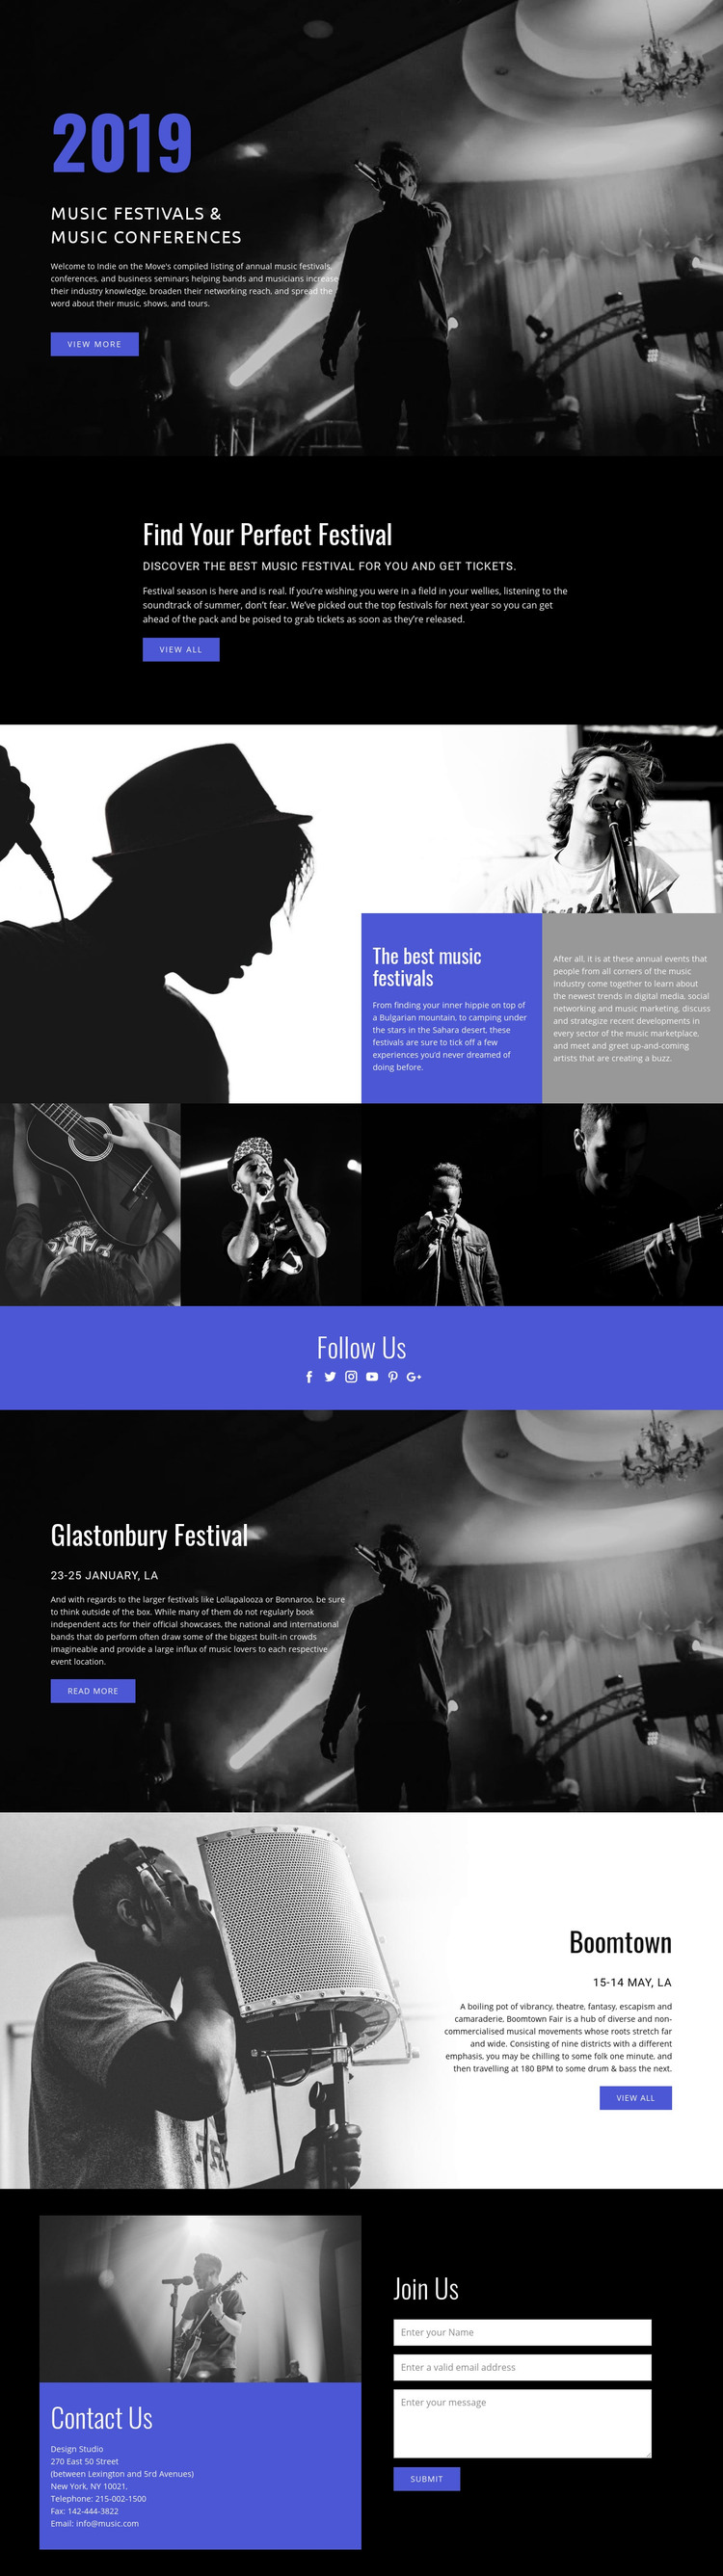 Music Festivals Homepage Design